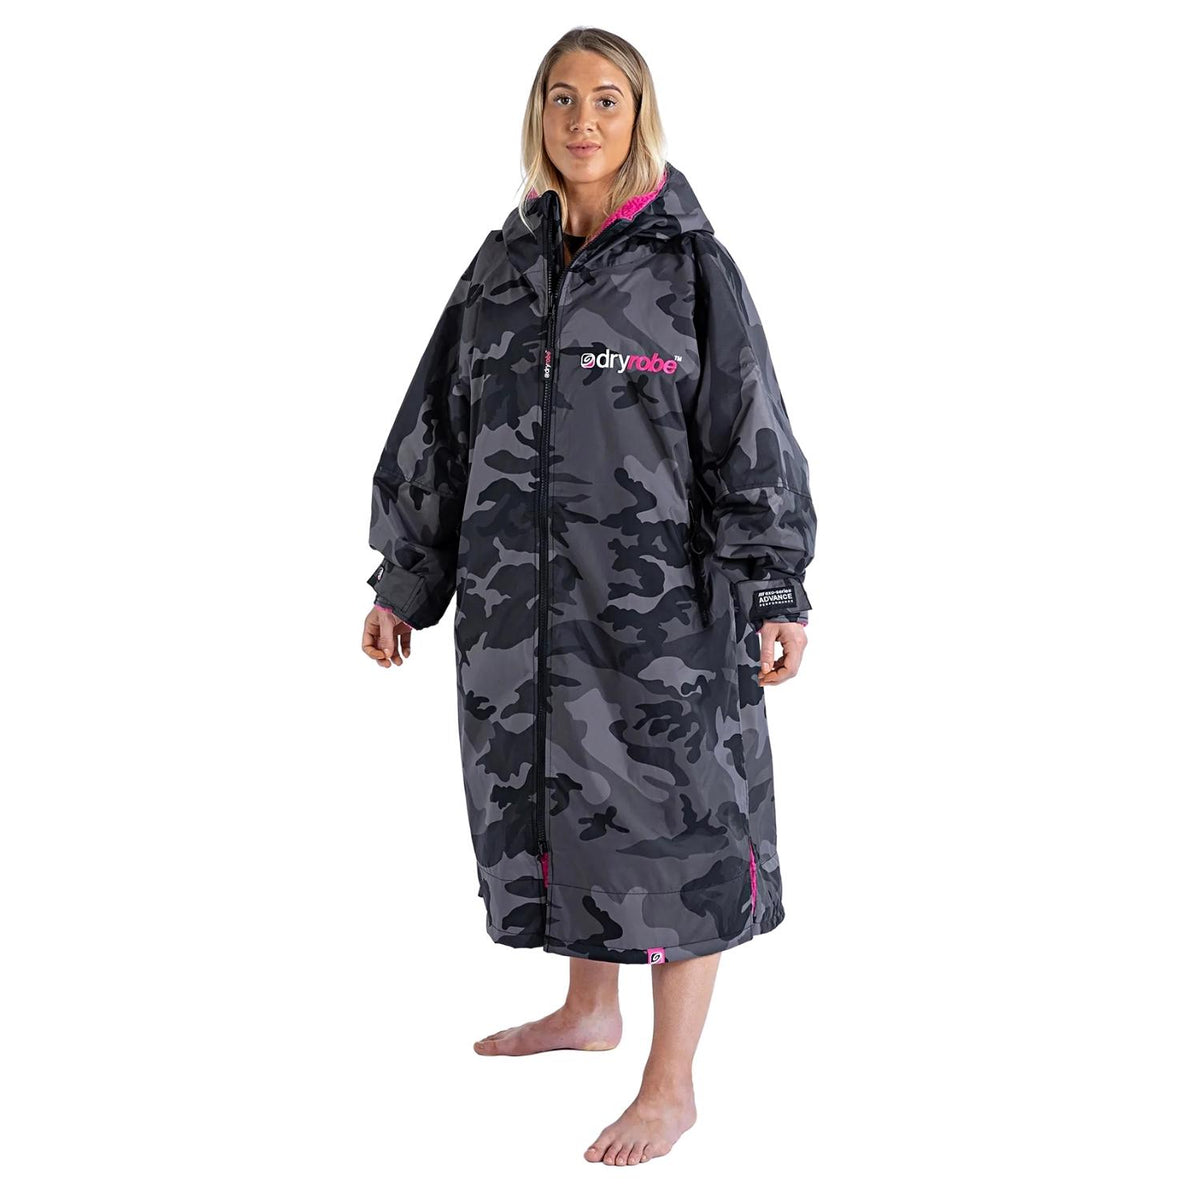 Dryrobe Advance Long Sleeve Drying &amp; Changing Robe - Black Camo/Pink - Changing Robe Poncho Towel by Dryrobe